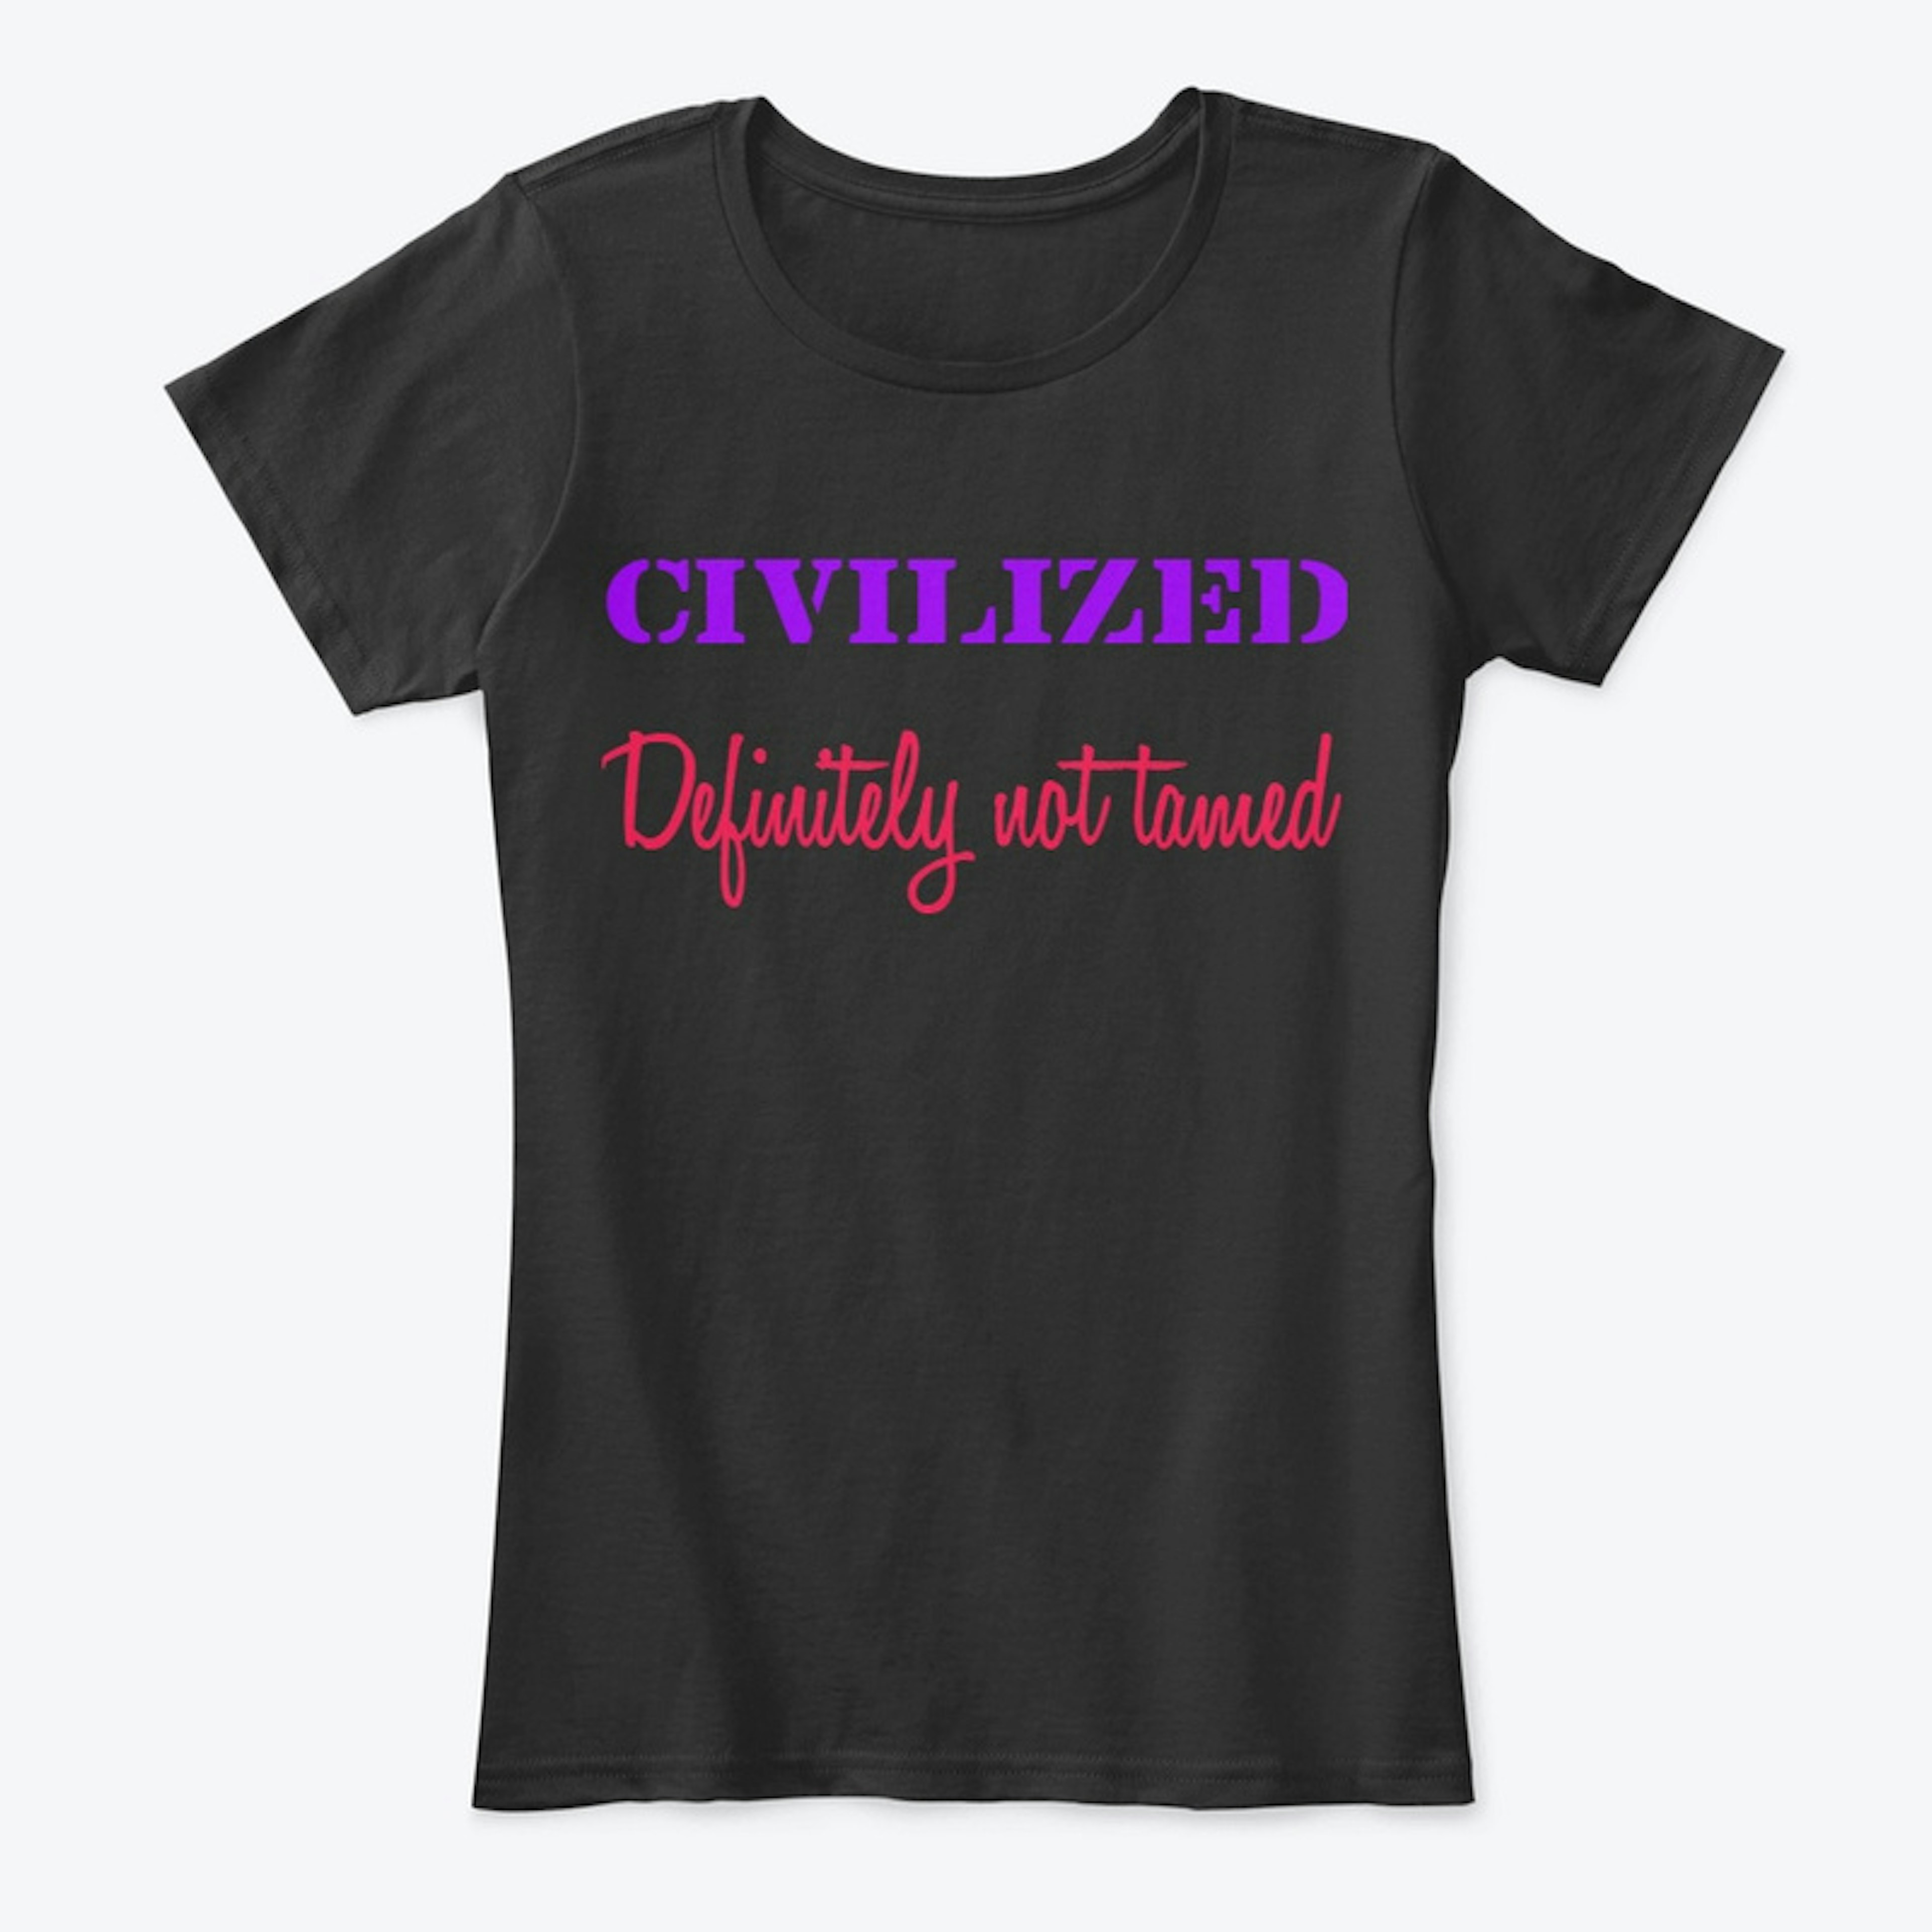 Civilized/definitely not tamed